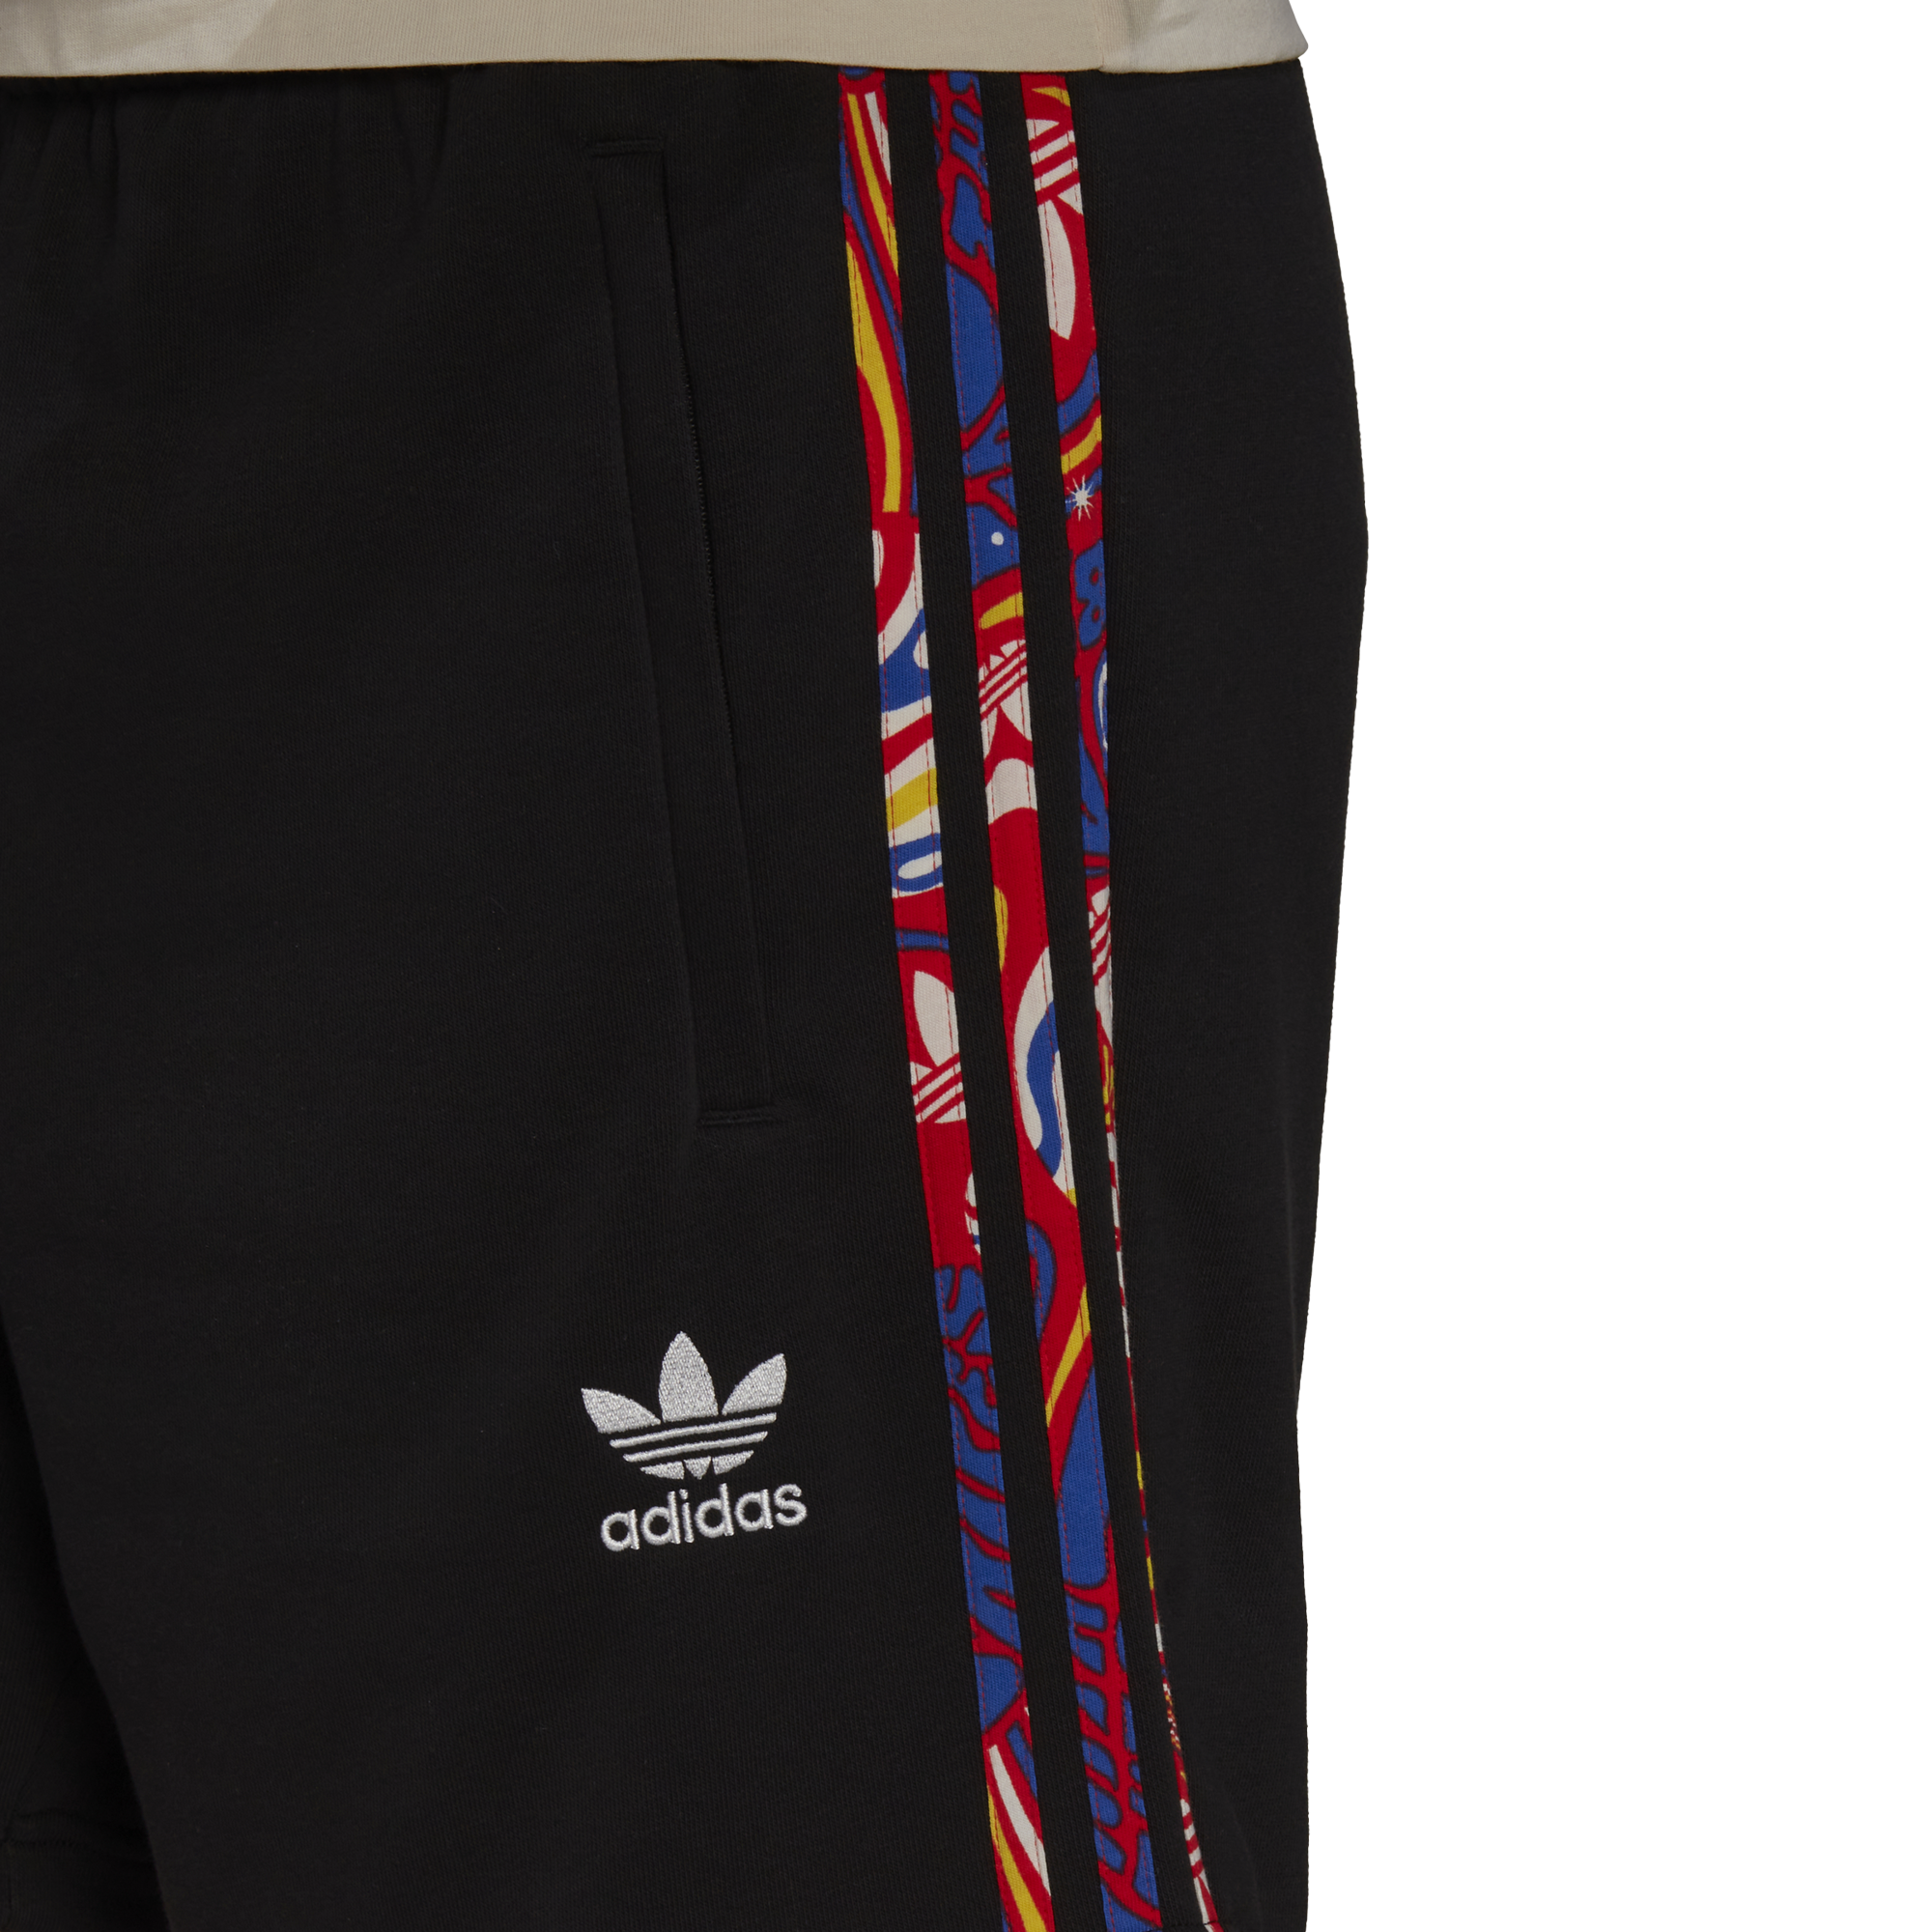 Adidas 3 Stripe Sweatpants - Women's